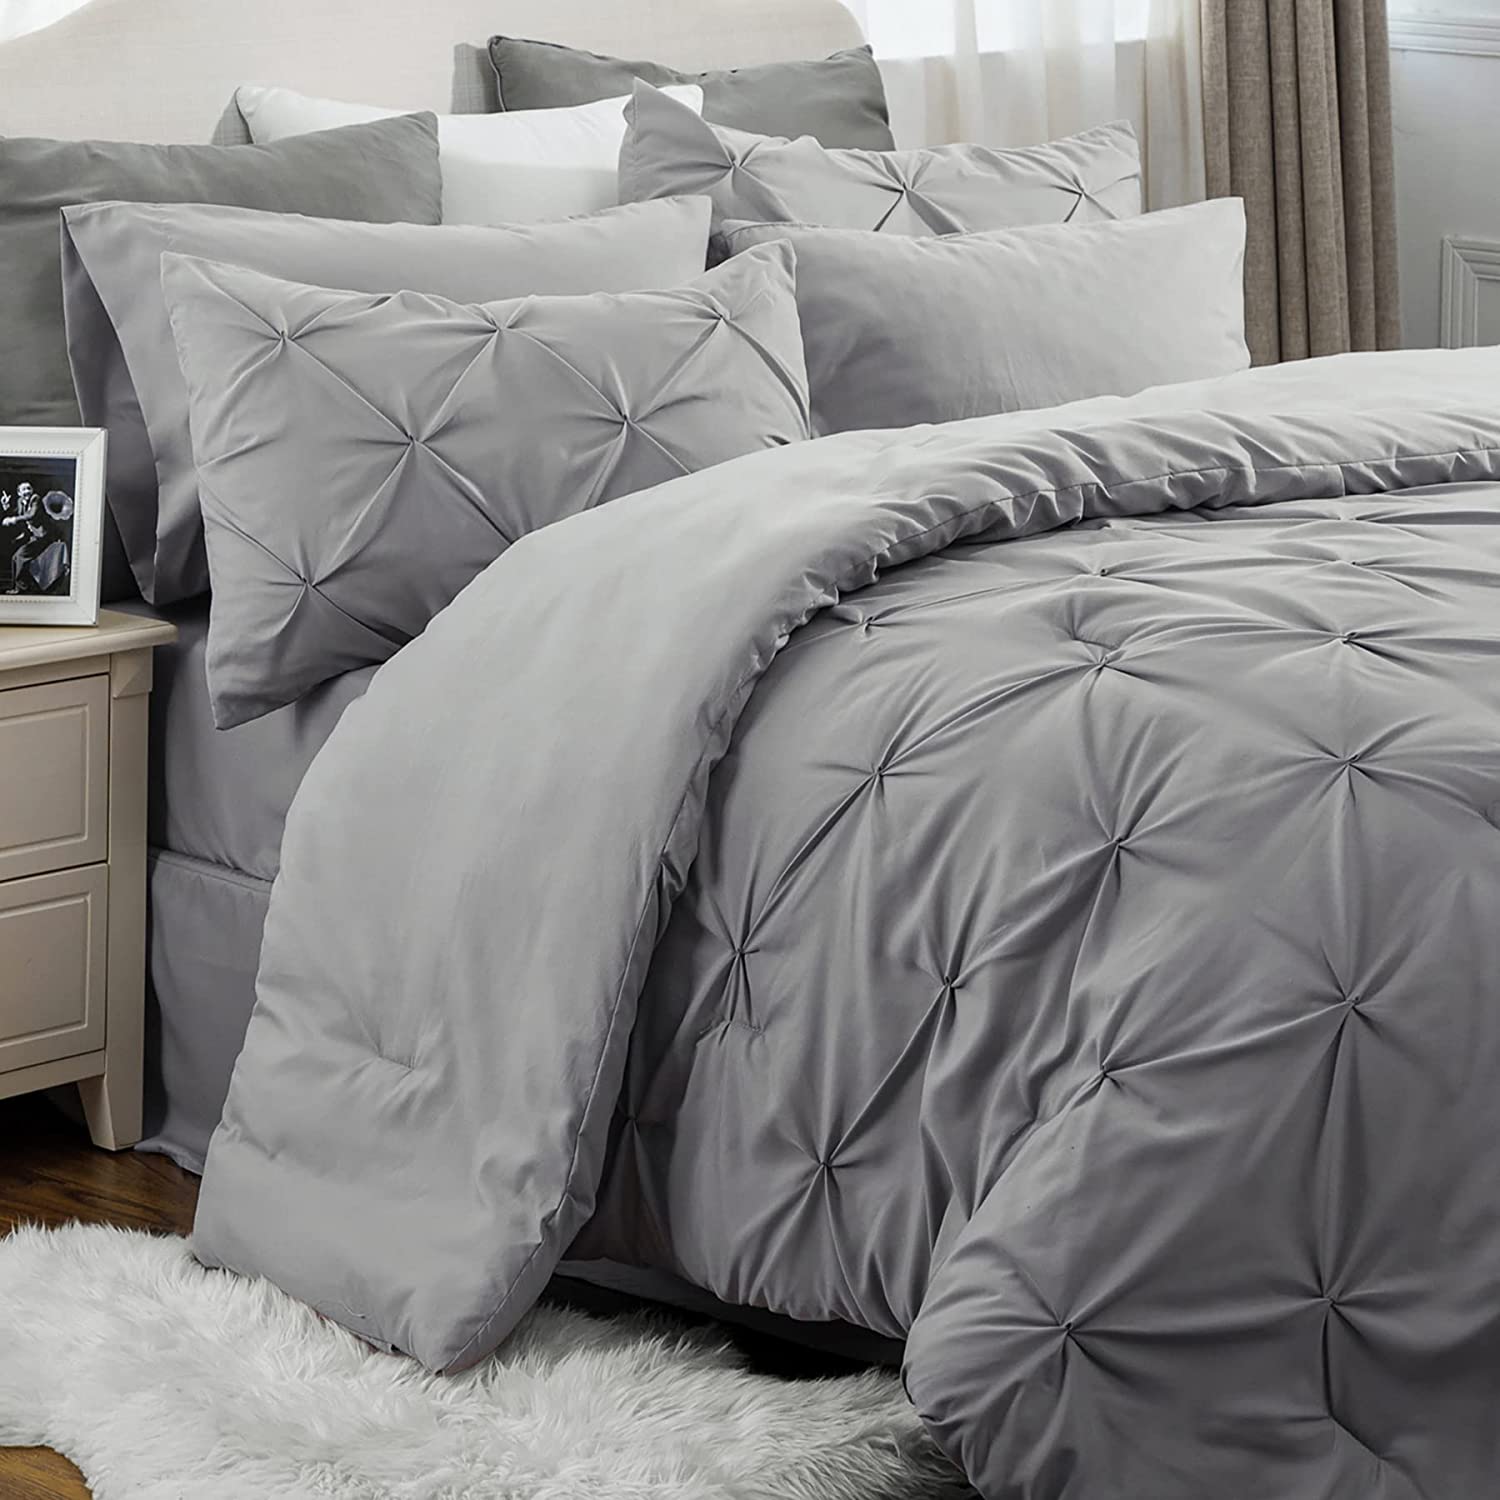 Nanko White Tufted 3-Piece Queen Comforter Set, 88 x 90 in